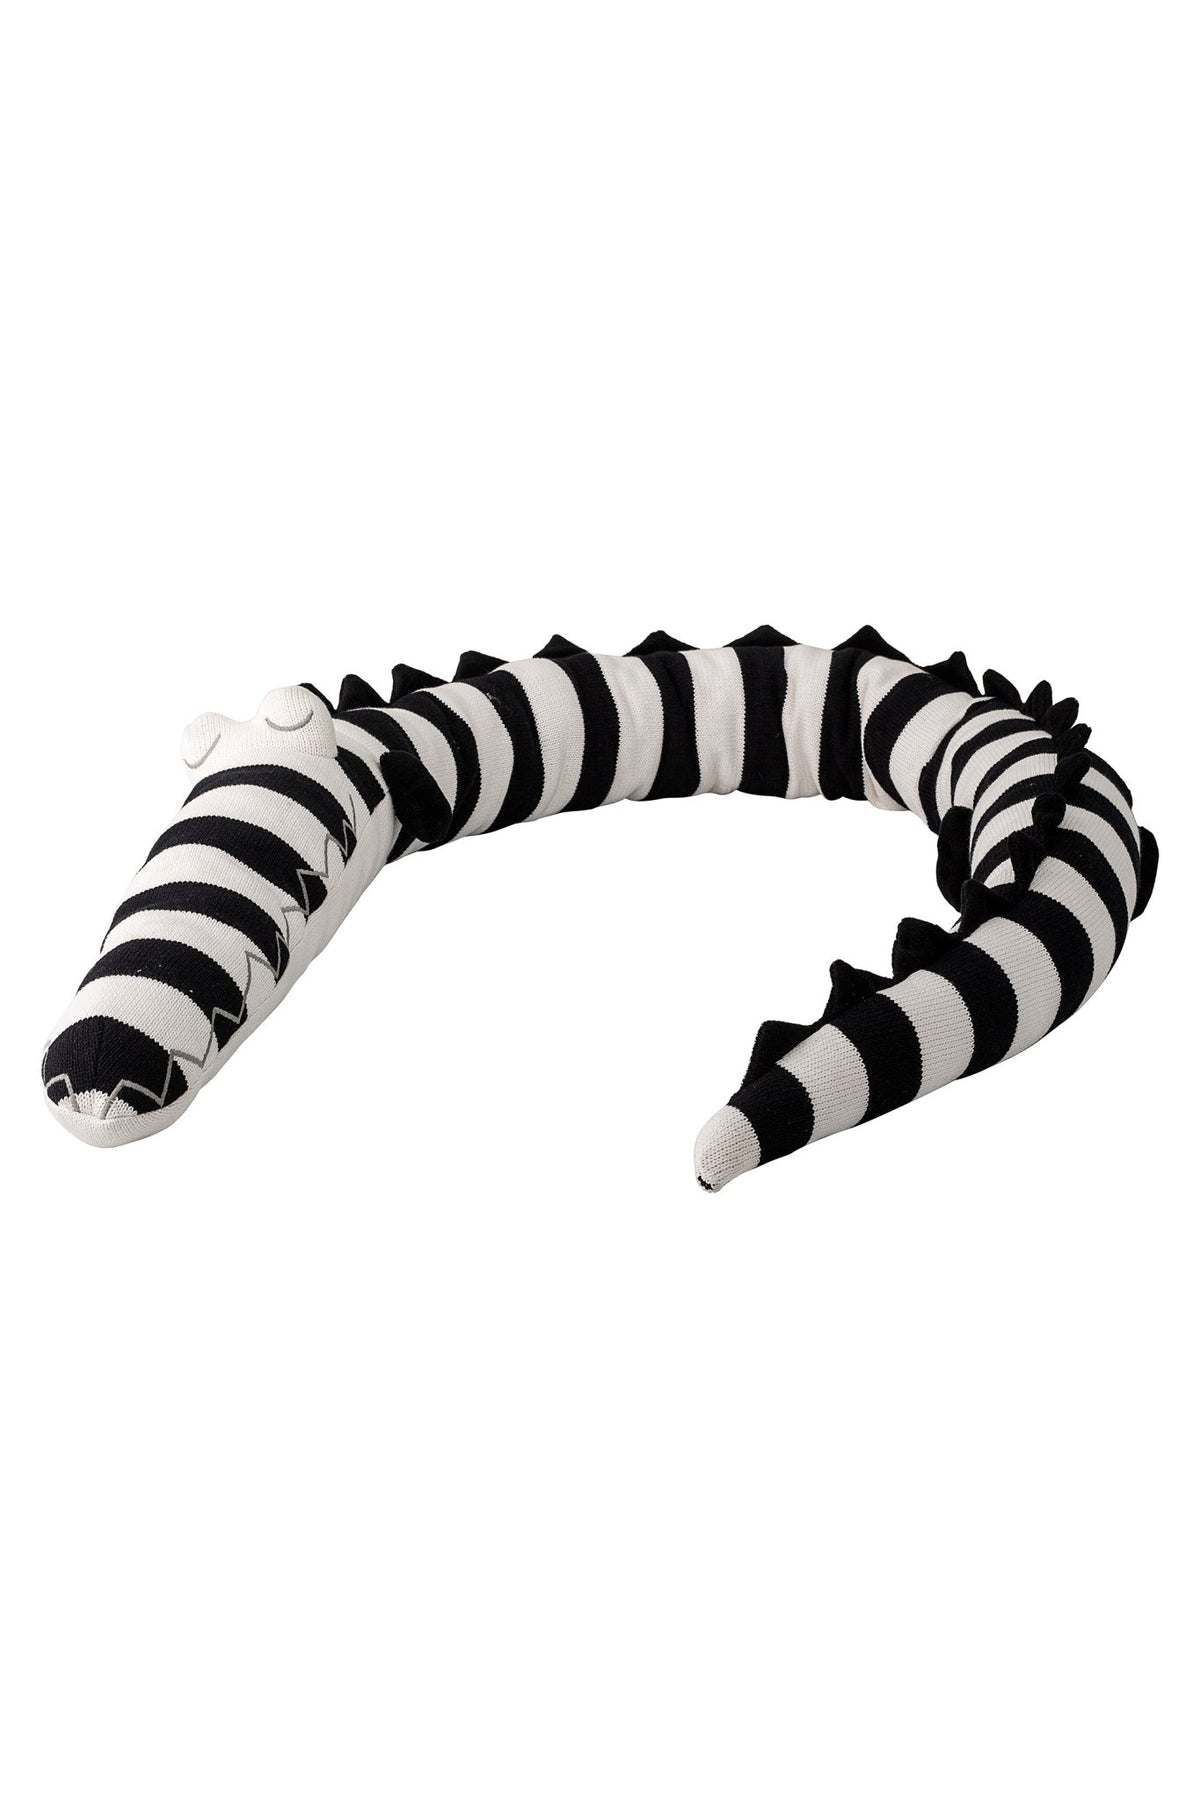 Rihan Soft Toy, Zebra - Koko-Kamel.com